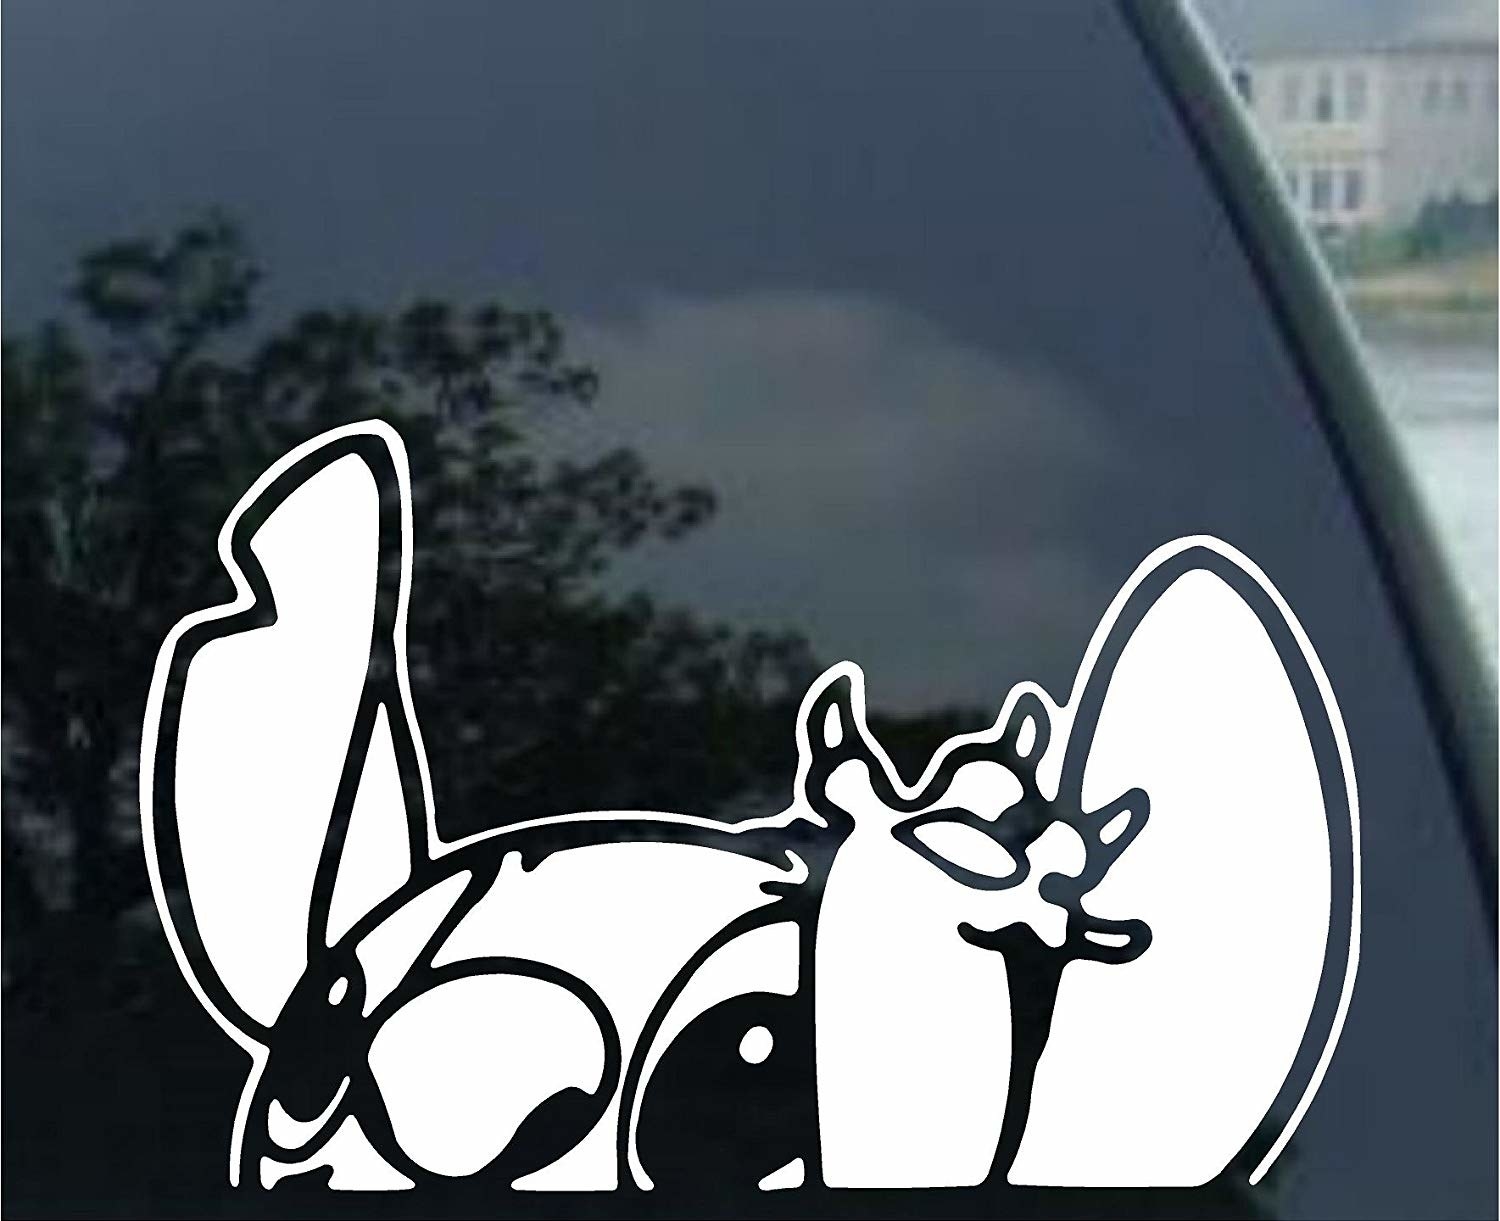 white stitch sticker on back of car